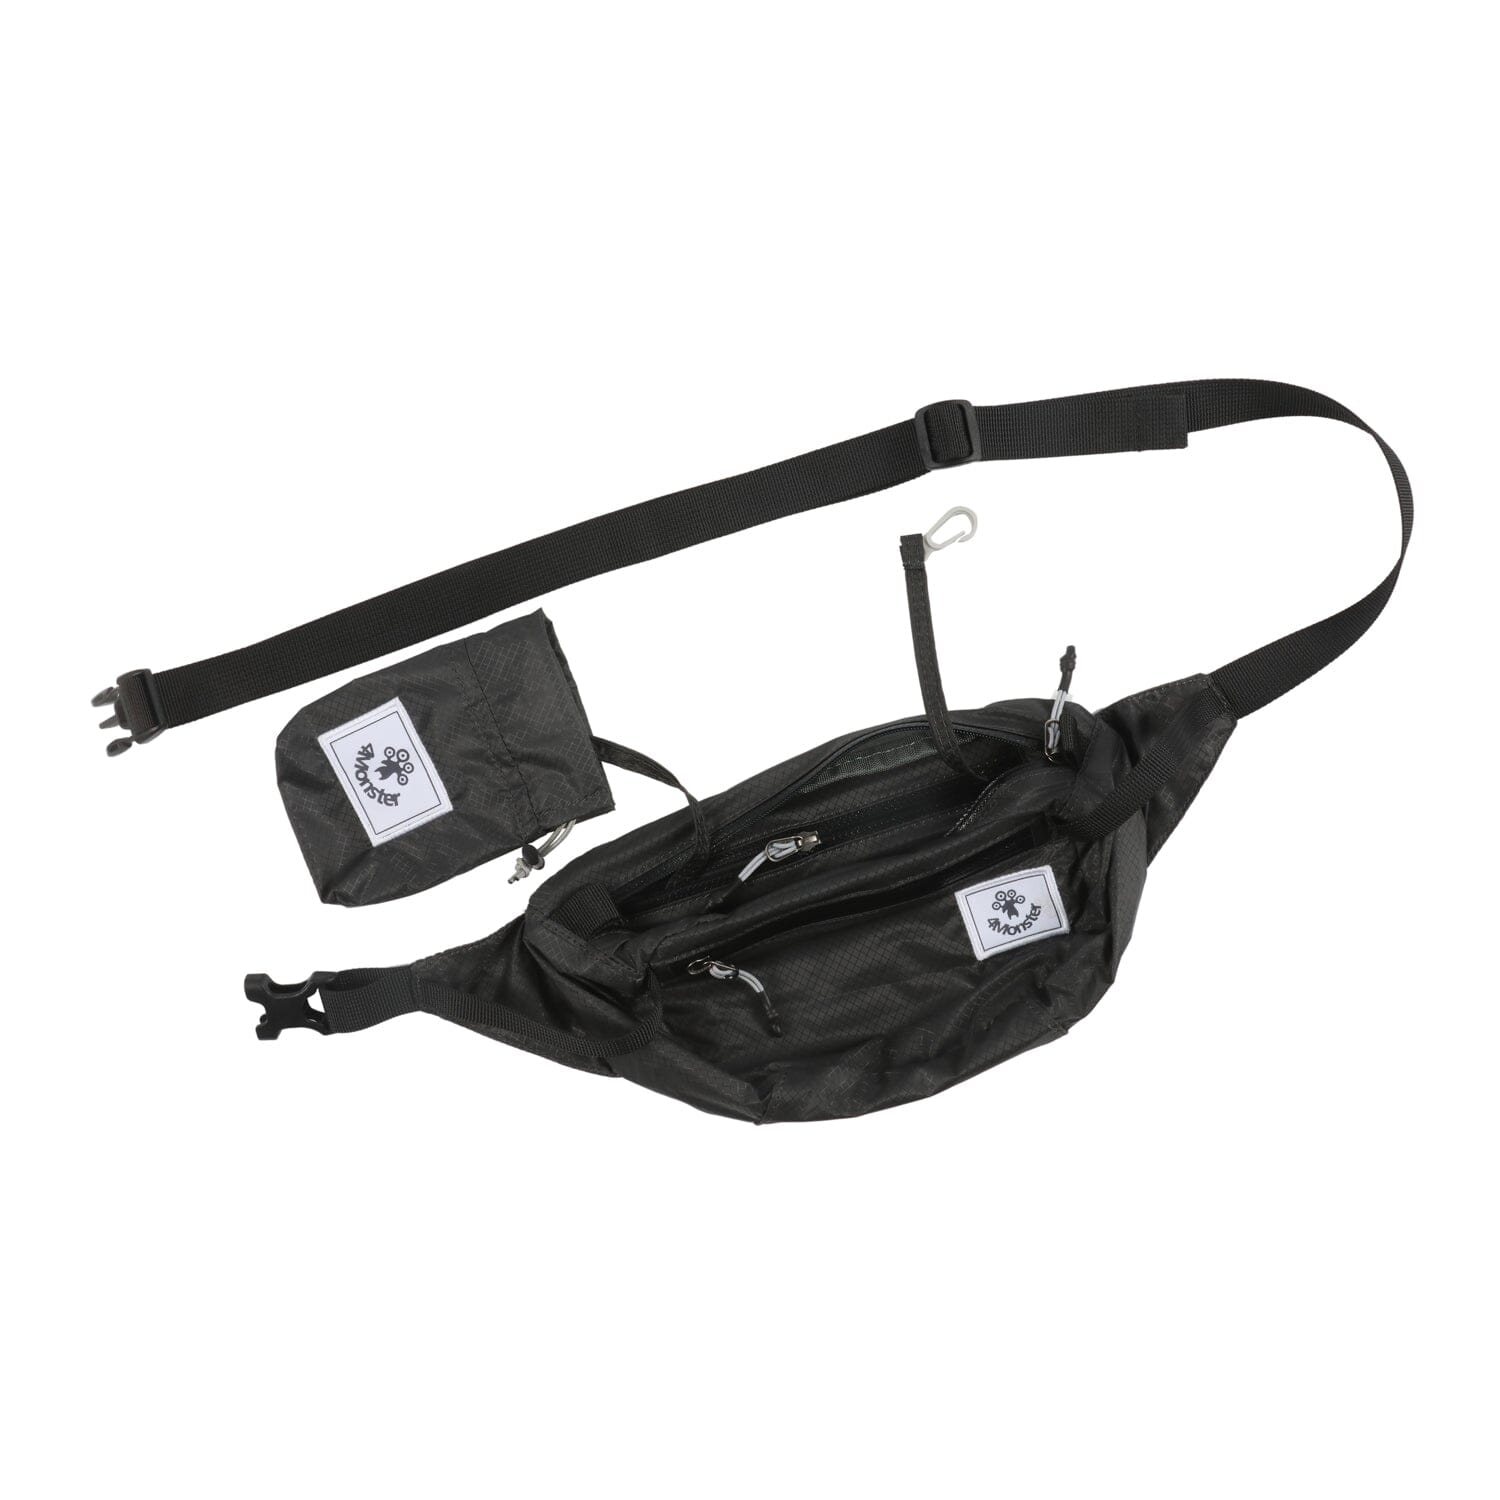 4Monster Hiking Waist Packs Portable with Multi-Pockets Adjustable